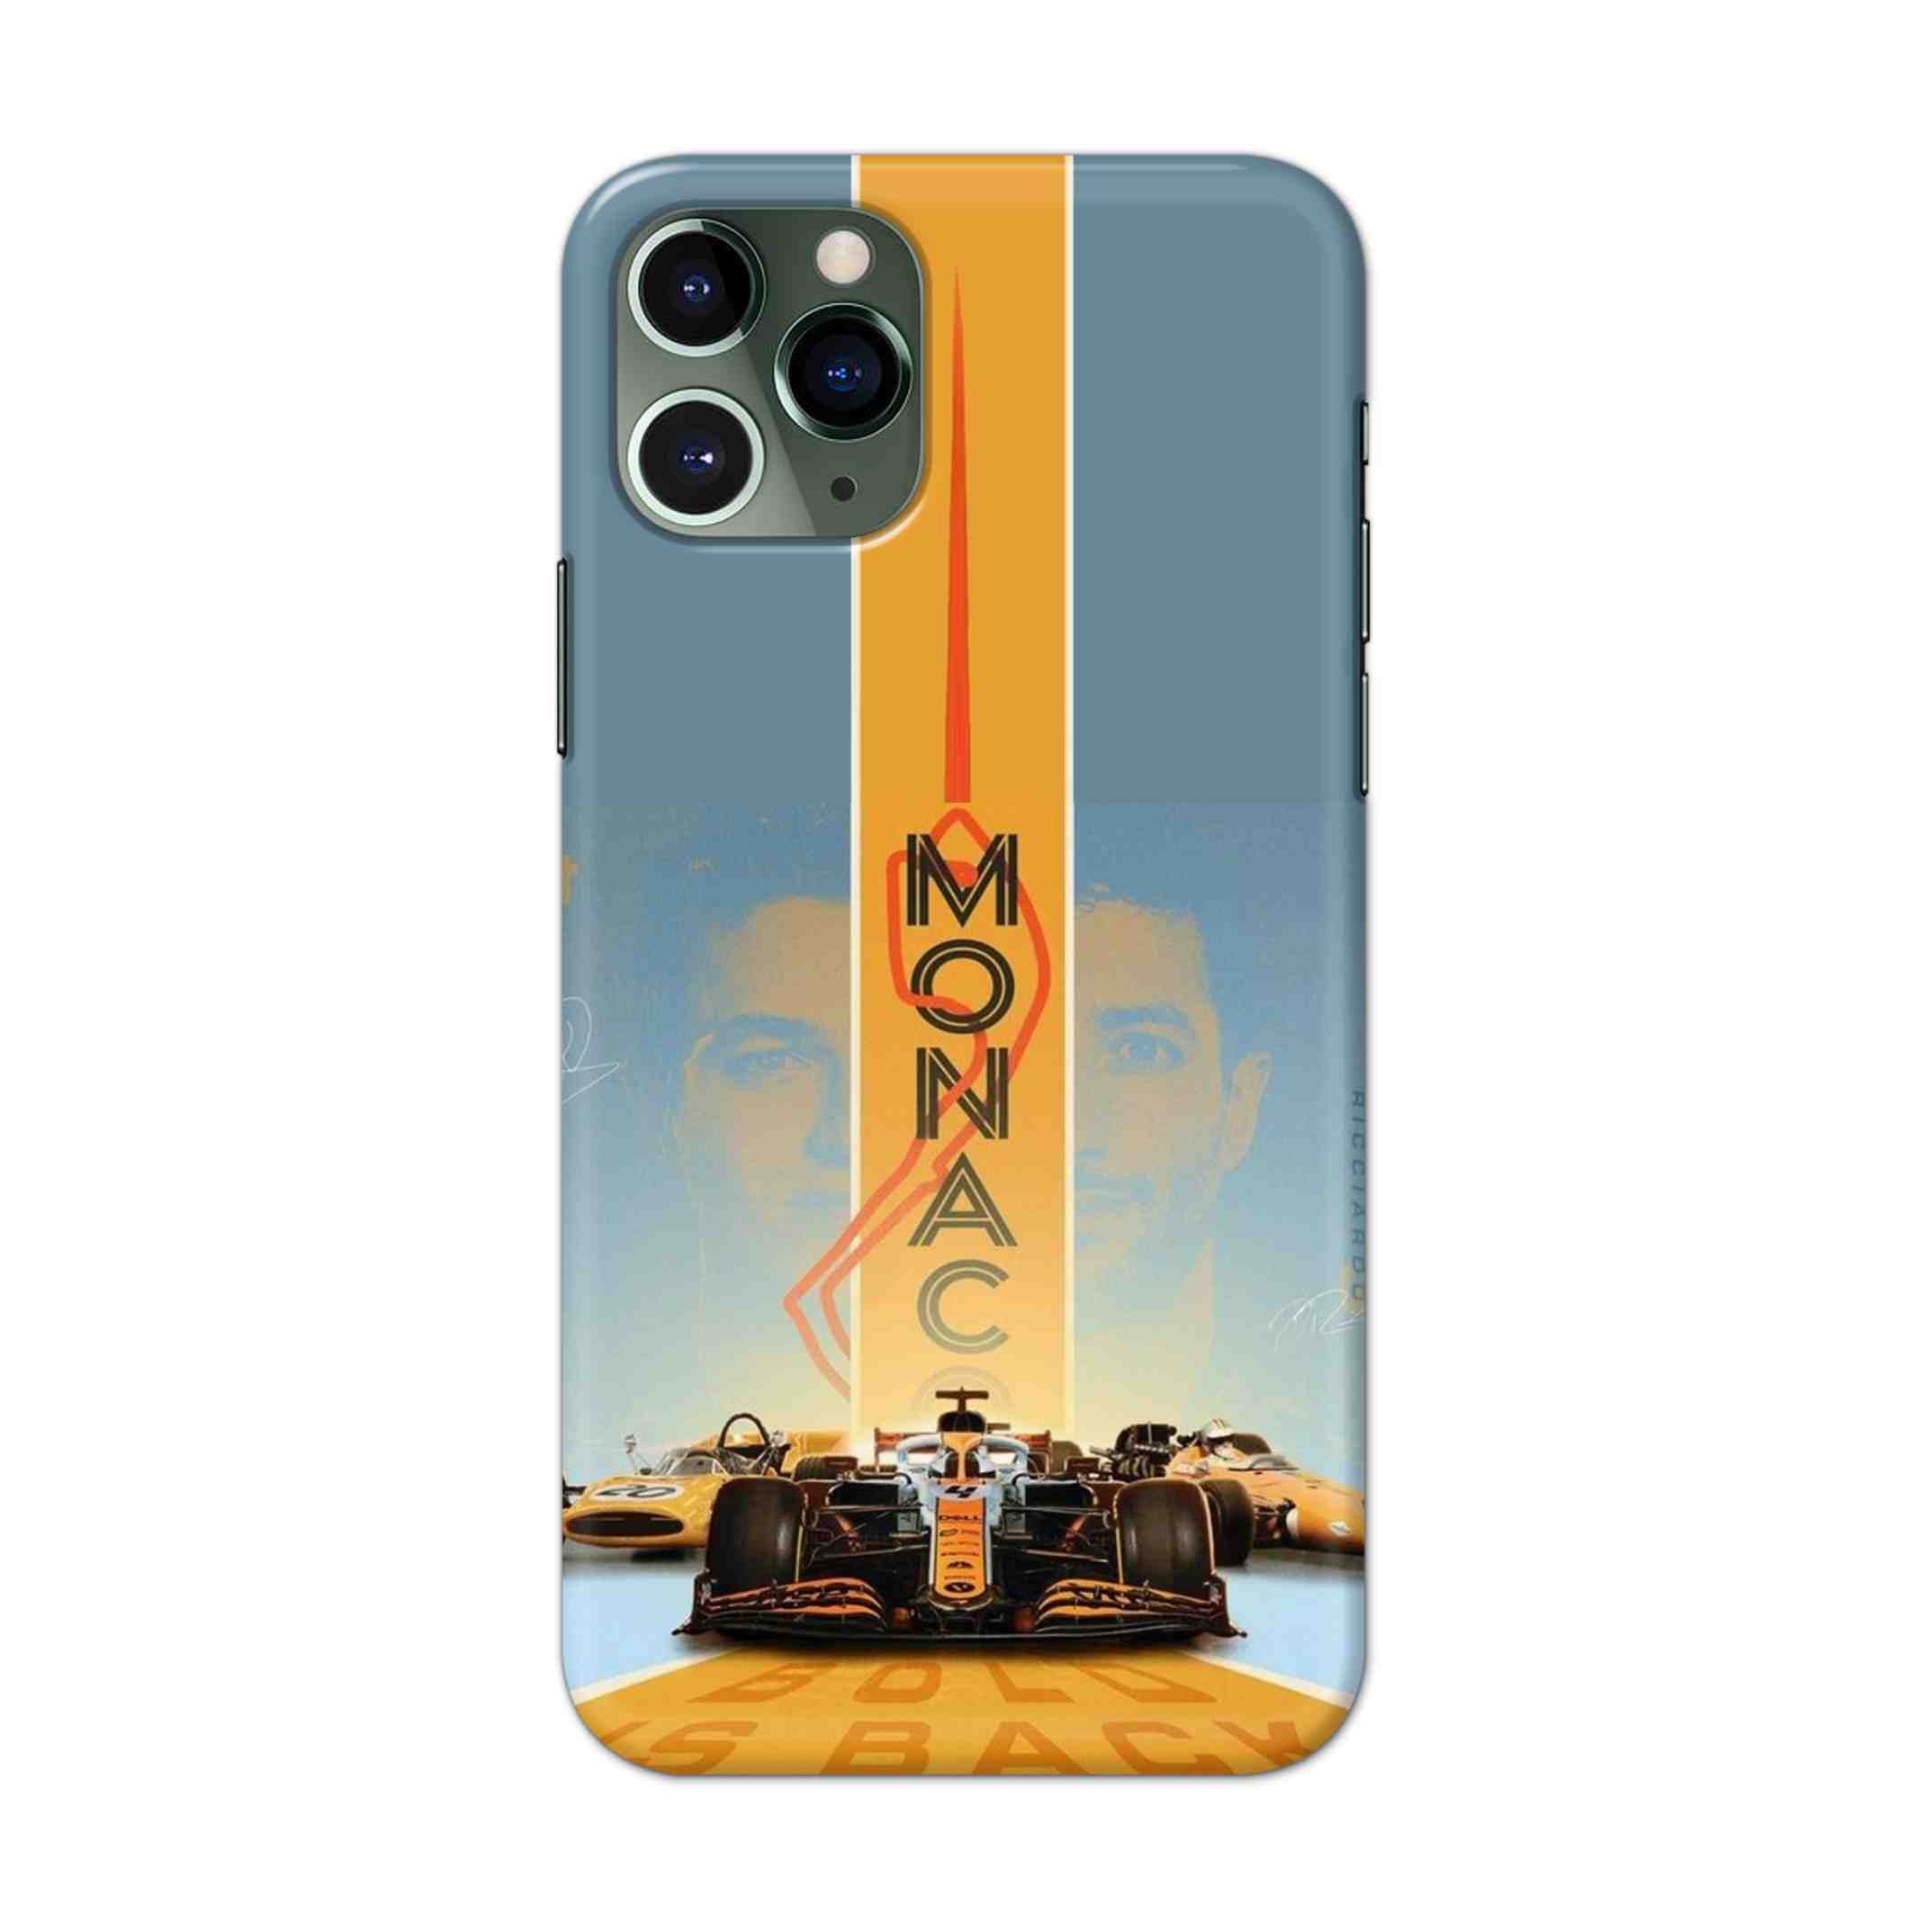 Buy Monac Formula Hard Back Mobile Phone Case/Cover For iPhone 11 Pro Online